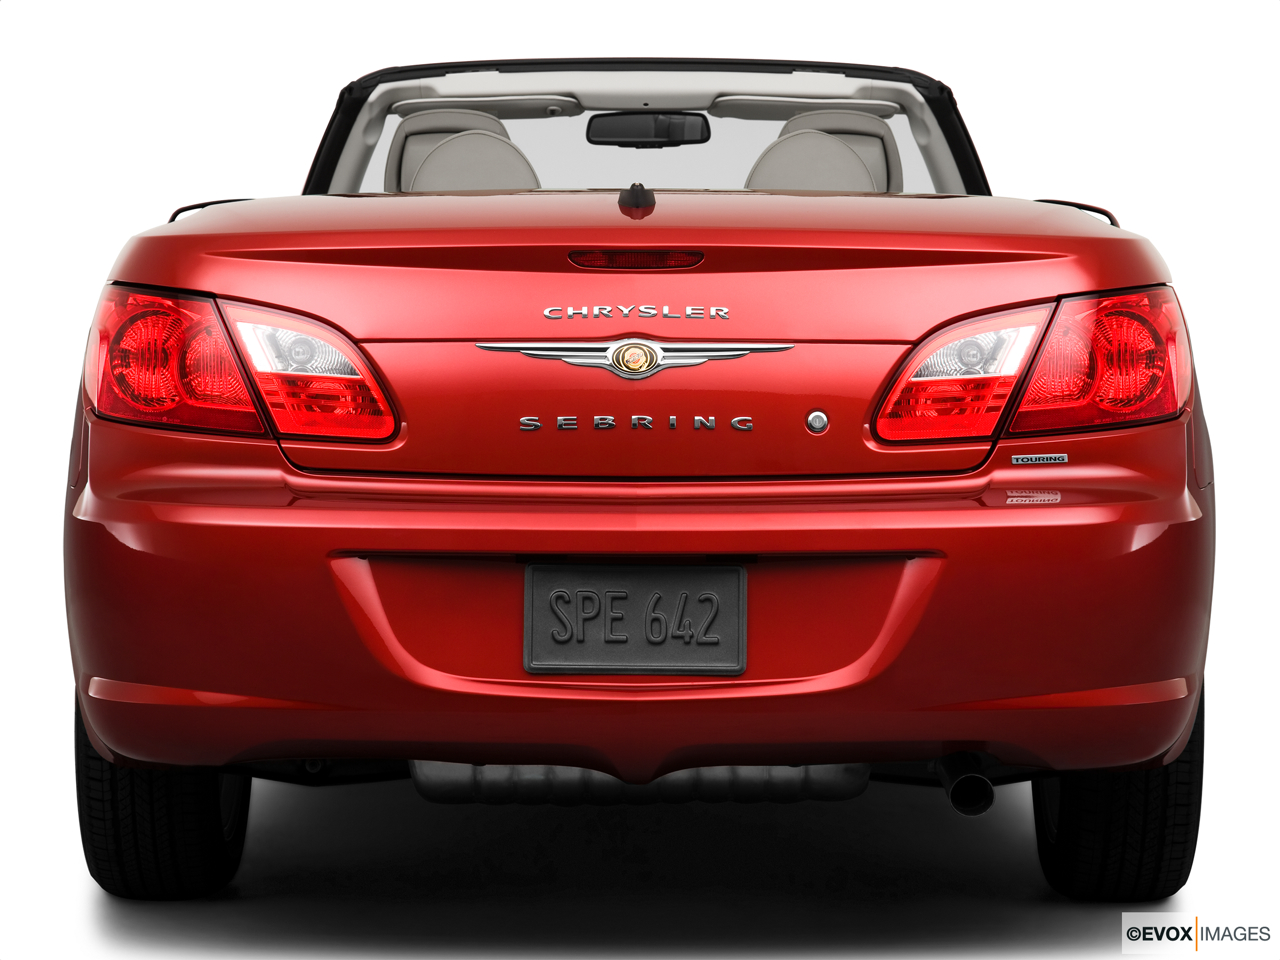 2010 Chrysler Sebring Touring Low/wide rear. 